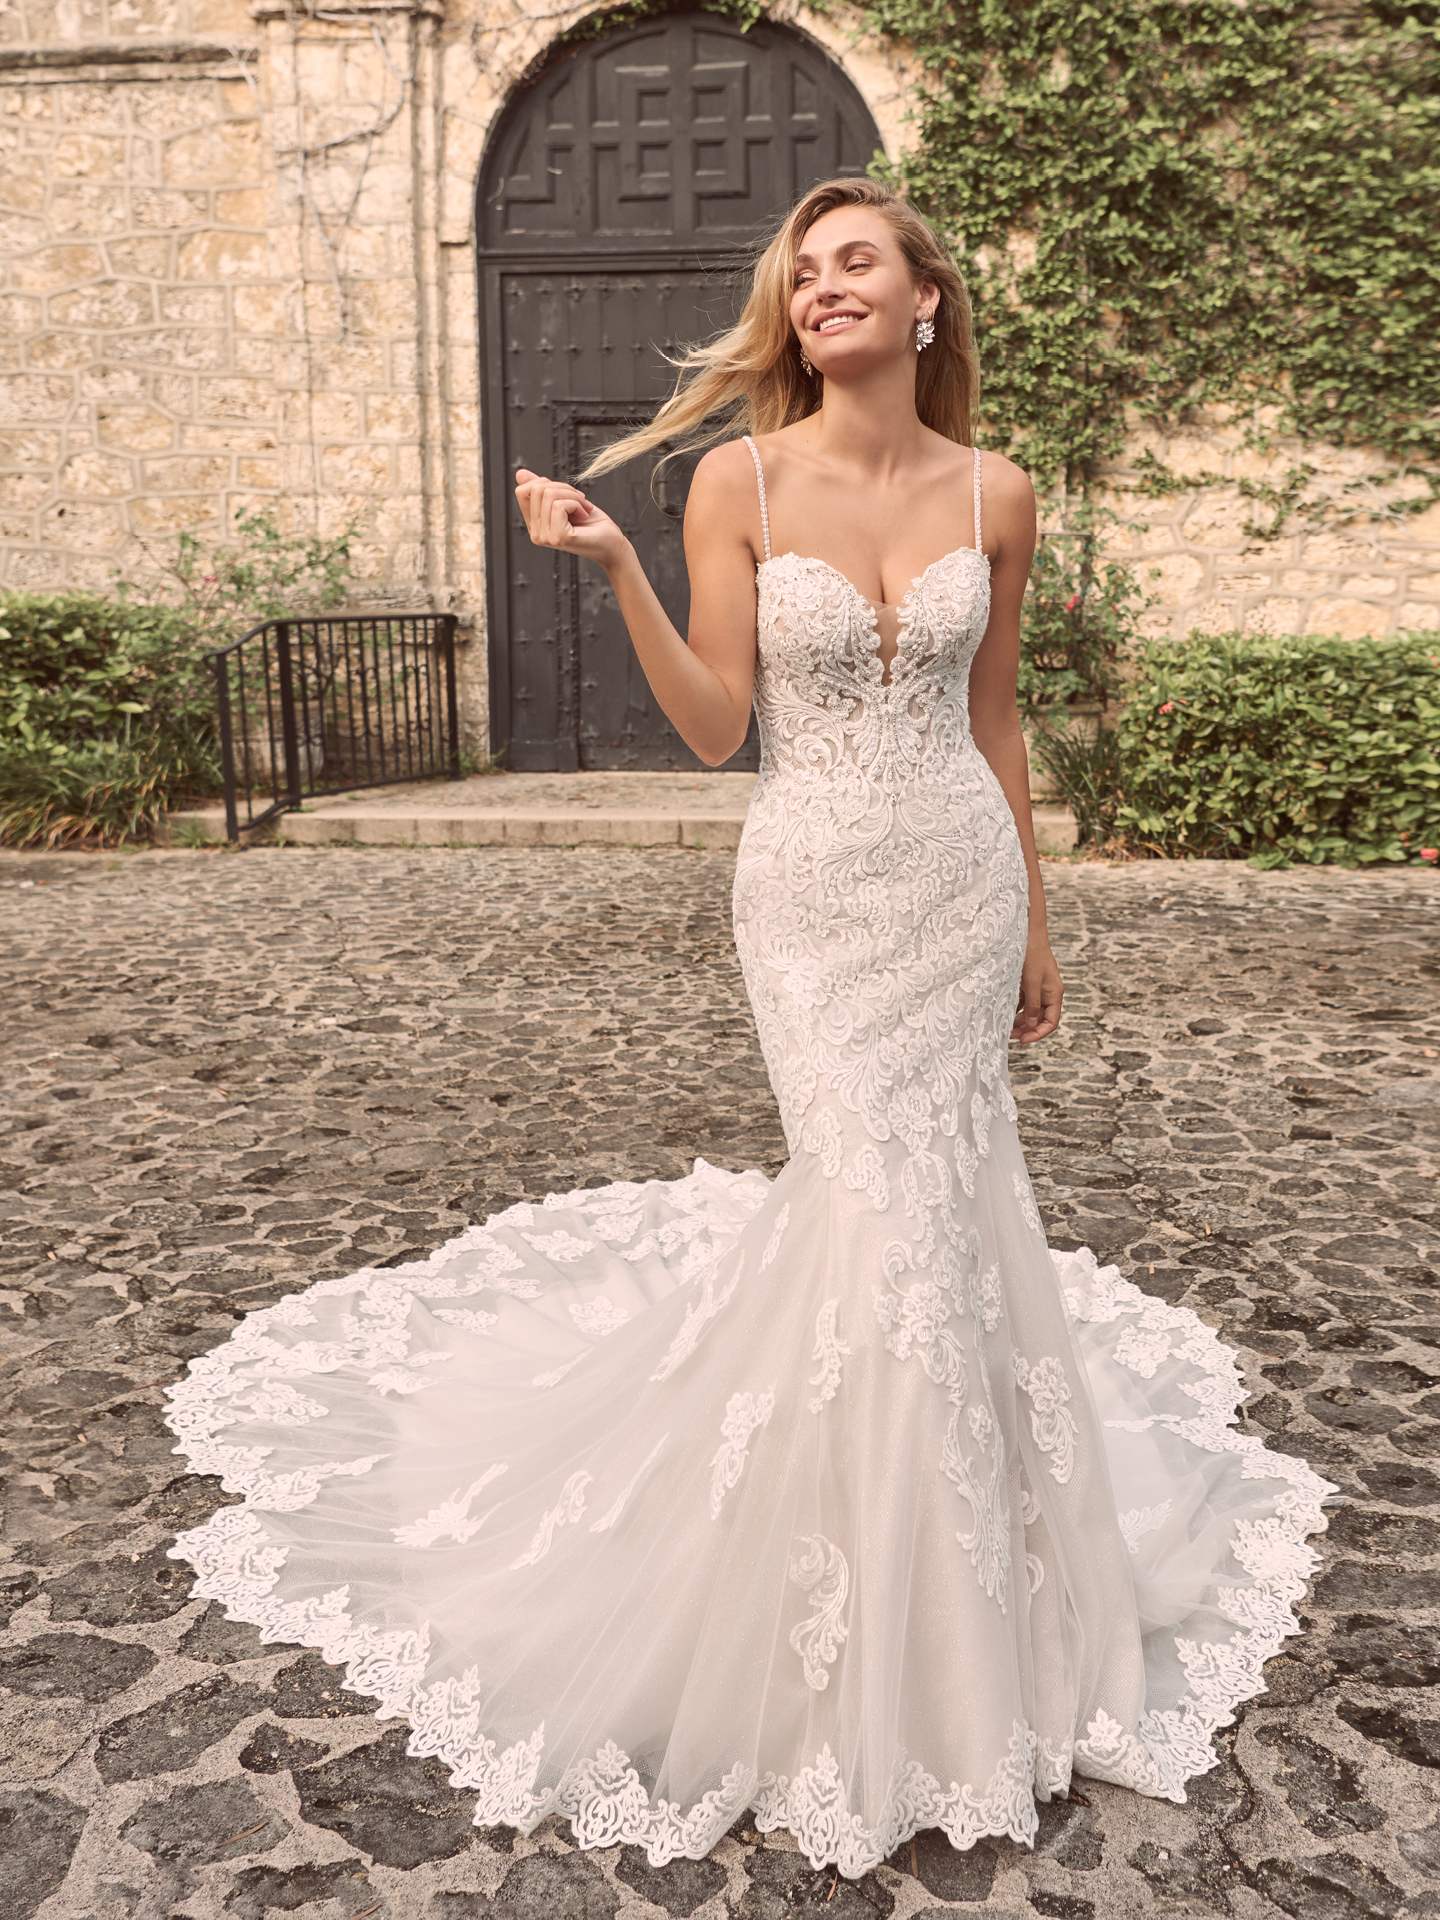 Sparkly Lace Fitandflare Bridal Dress Wedding Dress Kleinfeld Bridal